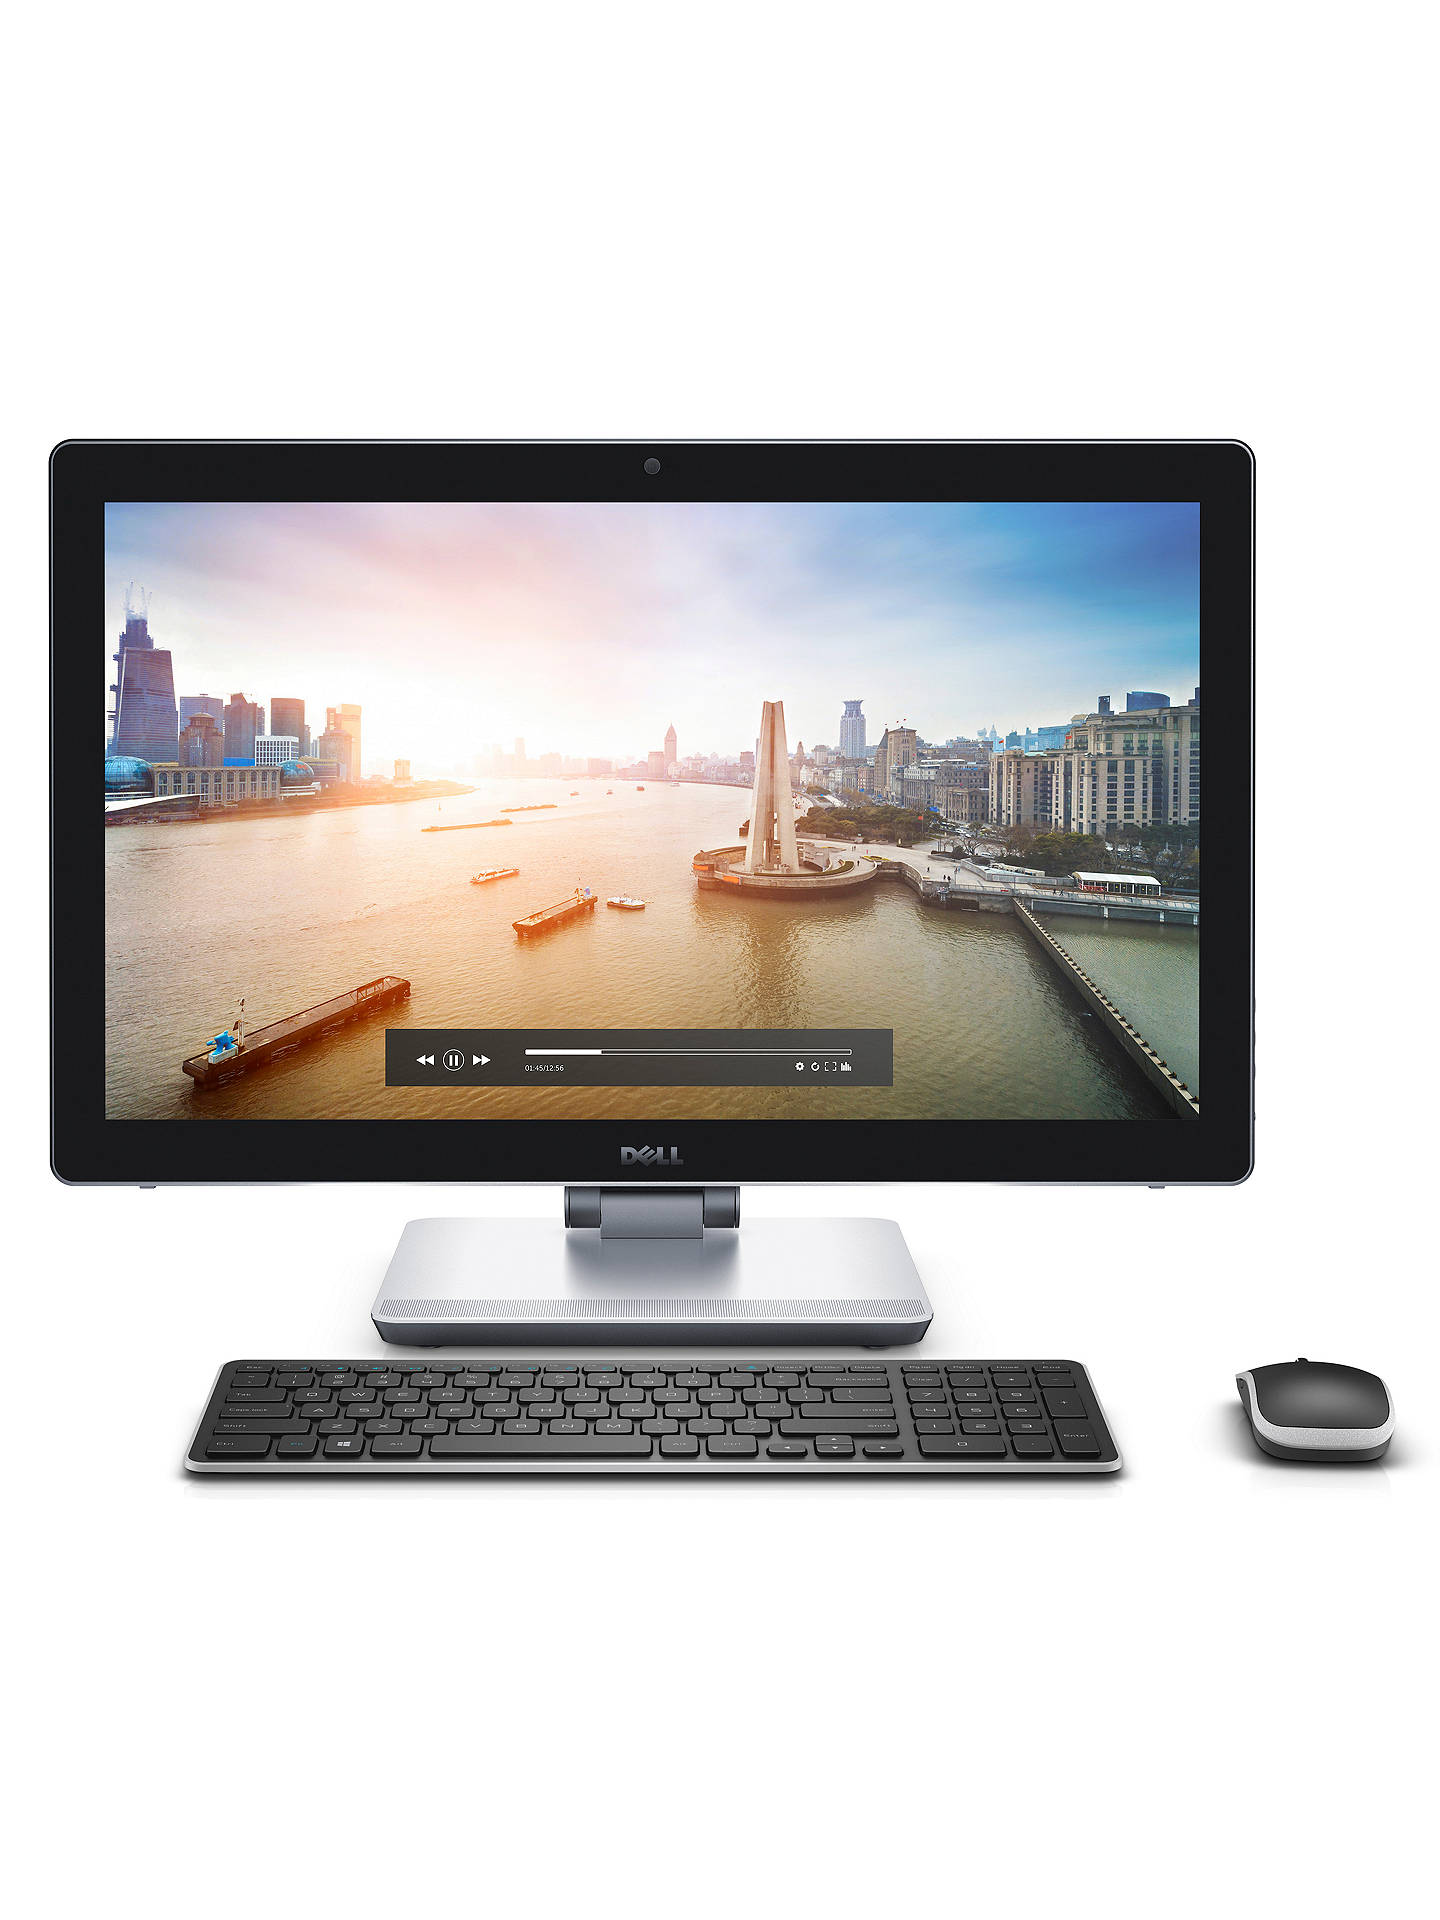 Dell Inspiron 24 7000 Series All-in-One Desktop PC, Intel ...